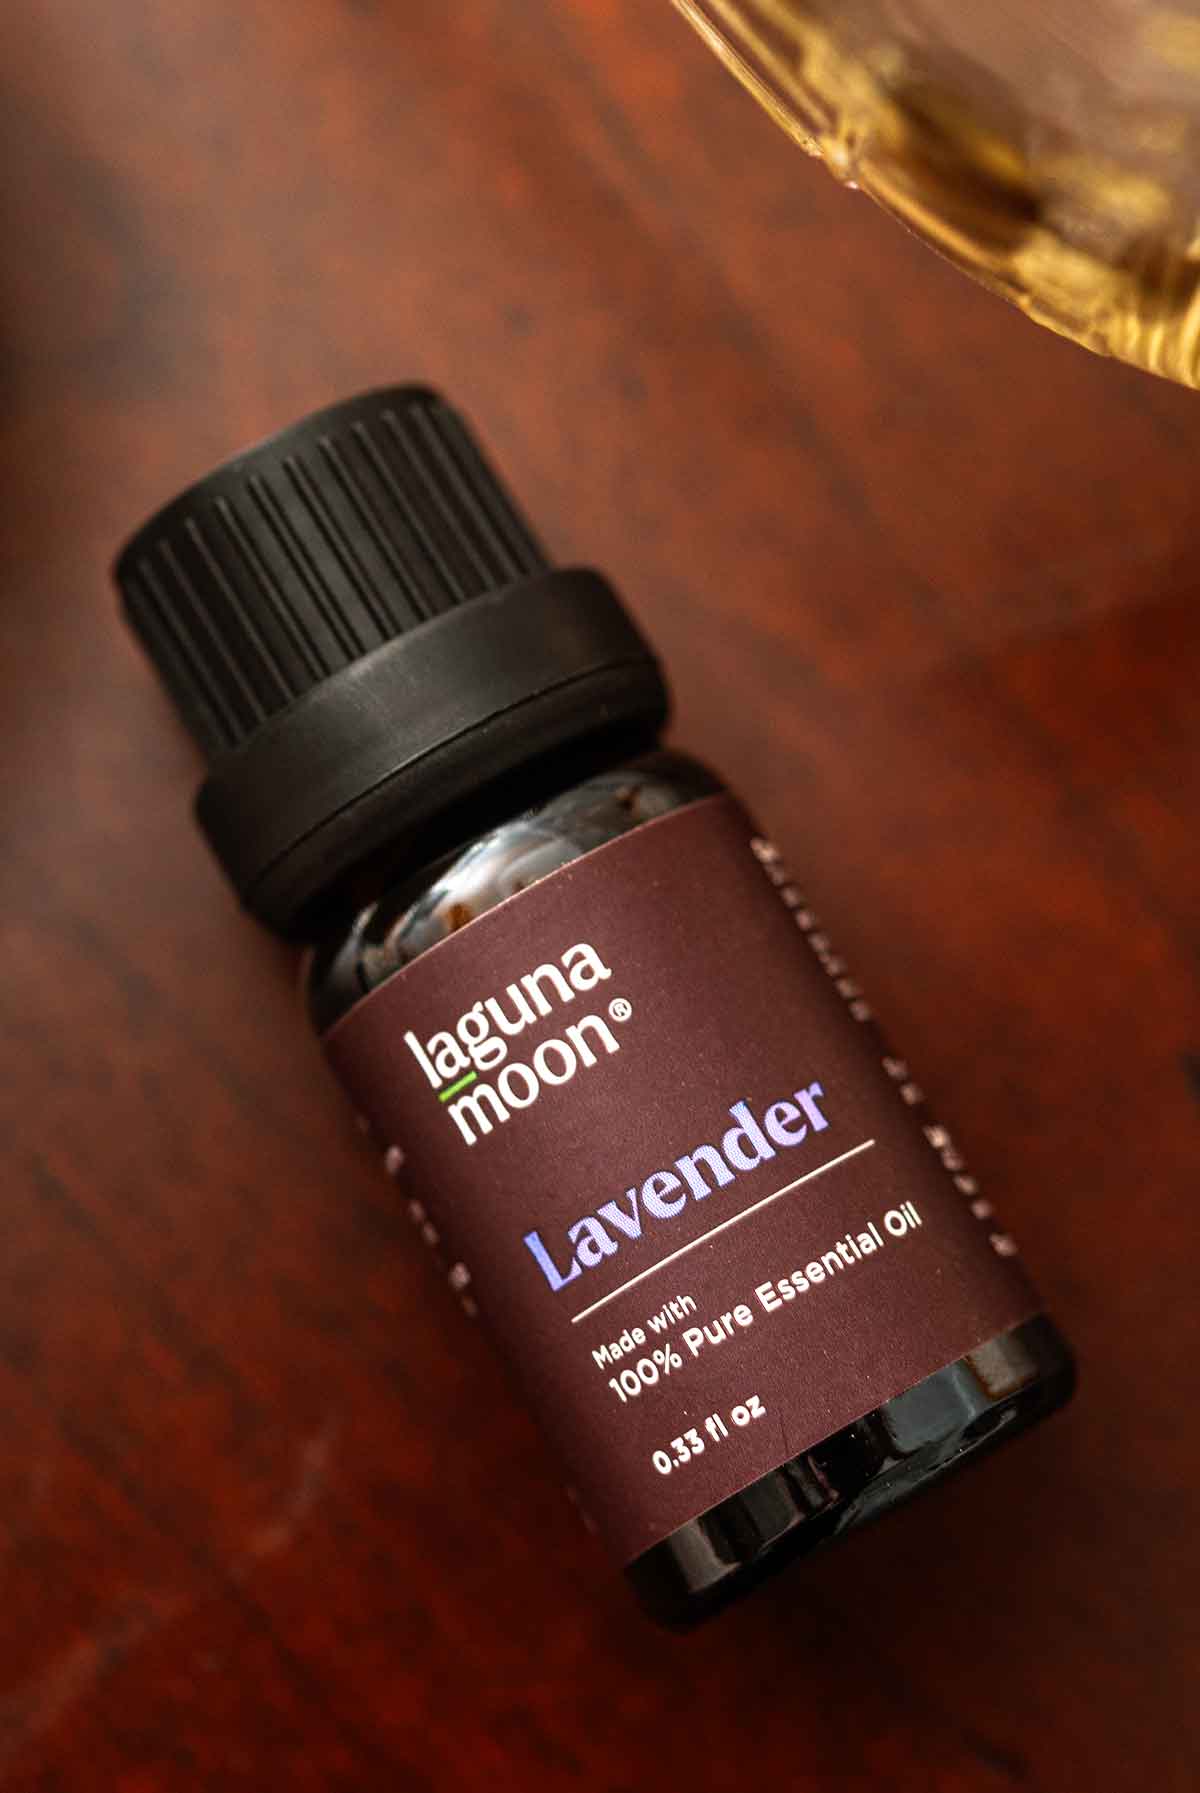 A small jar of Lagoonamoon Lavender oil on a table.